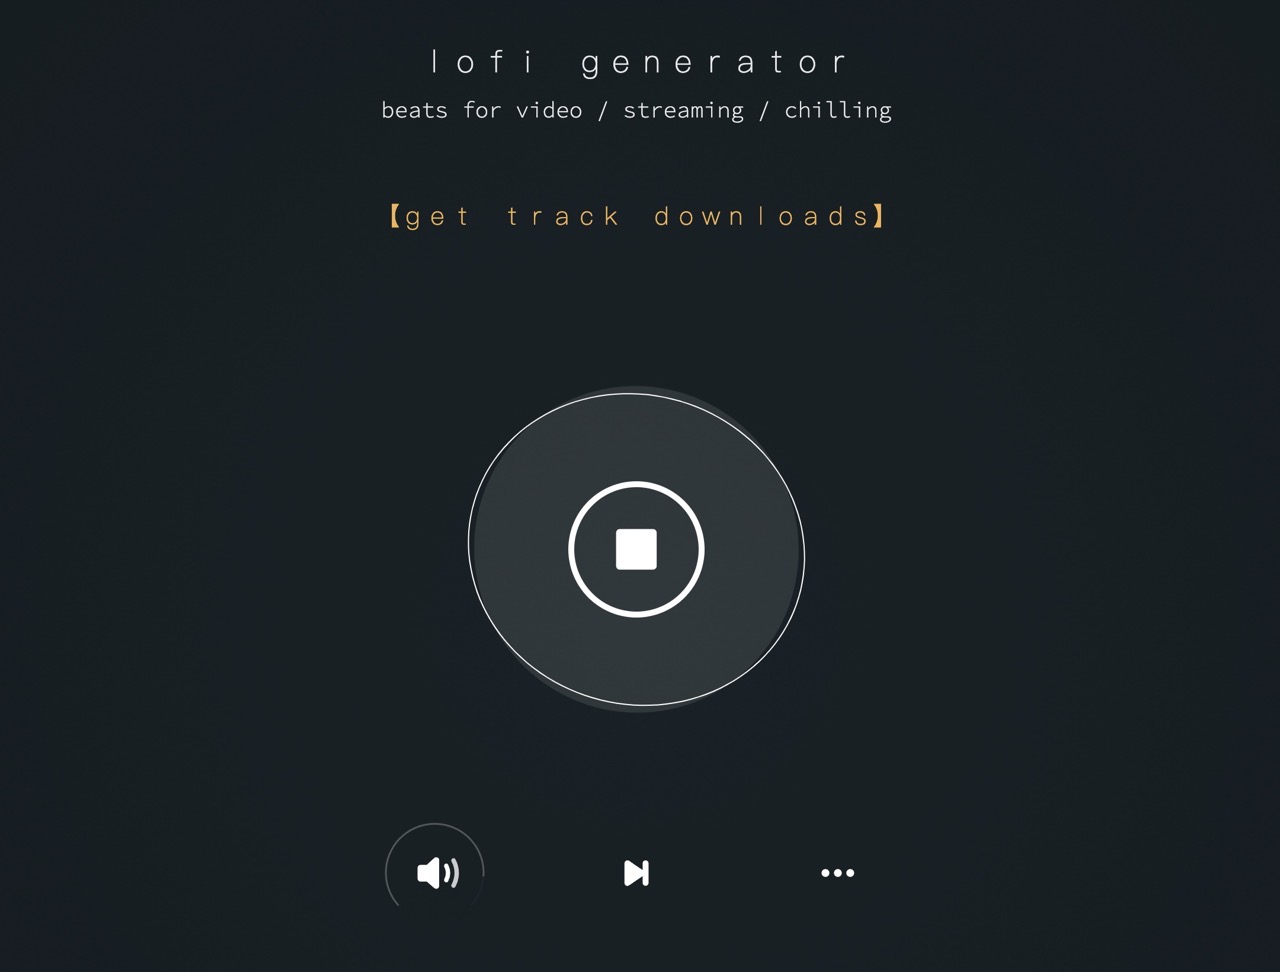 Lo-fi Generator 透過演算法產生免版稅音樂素材，適用於個人或商業用途